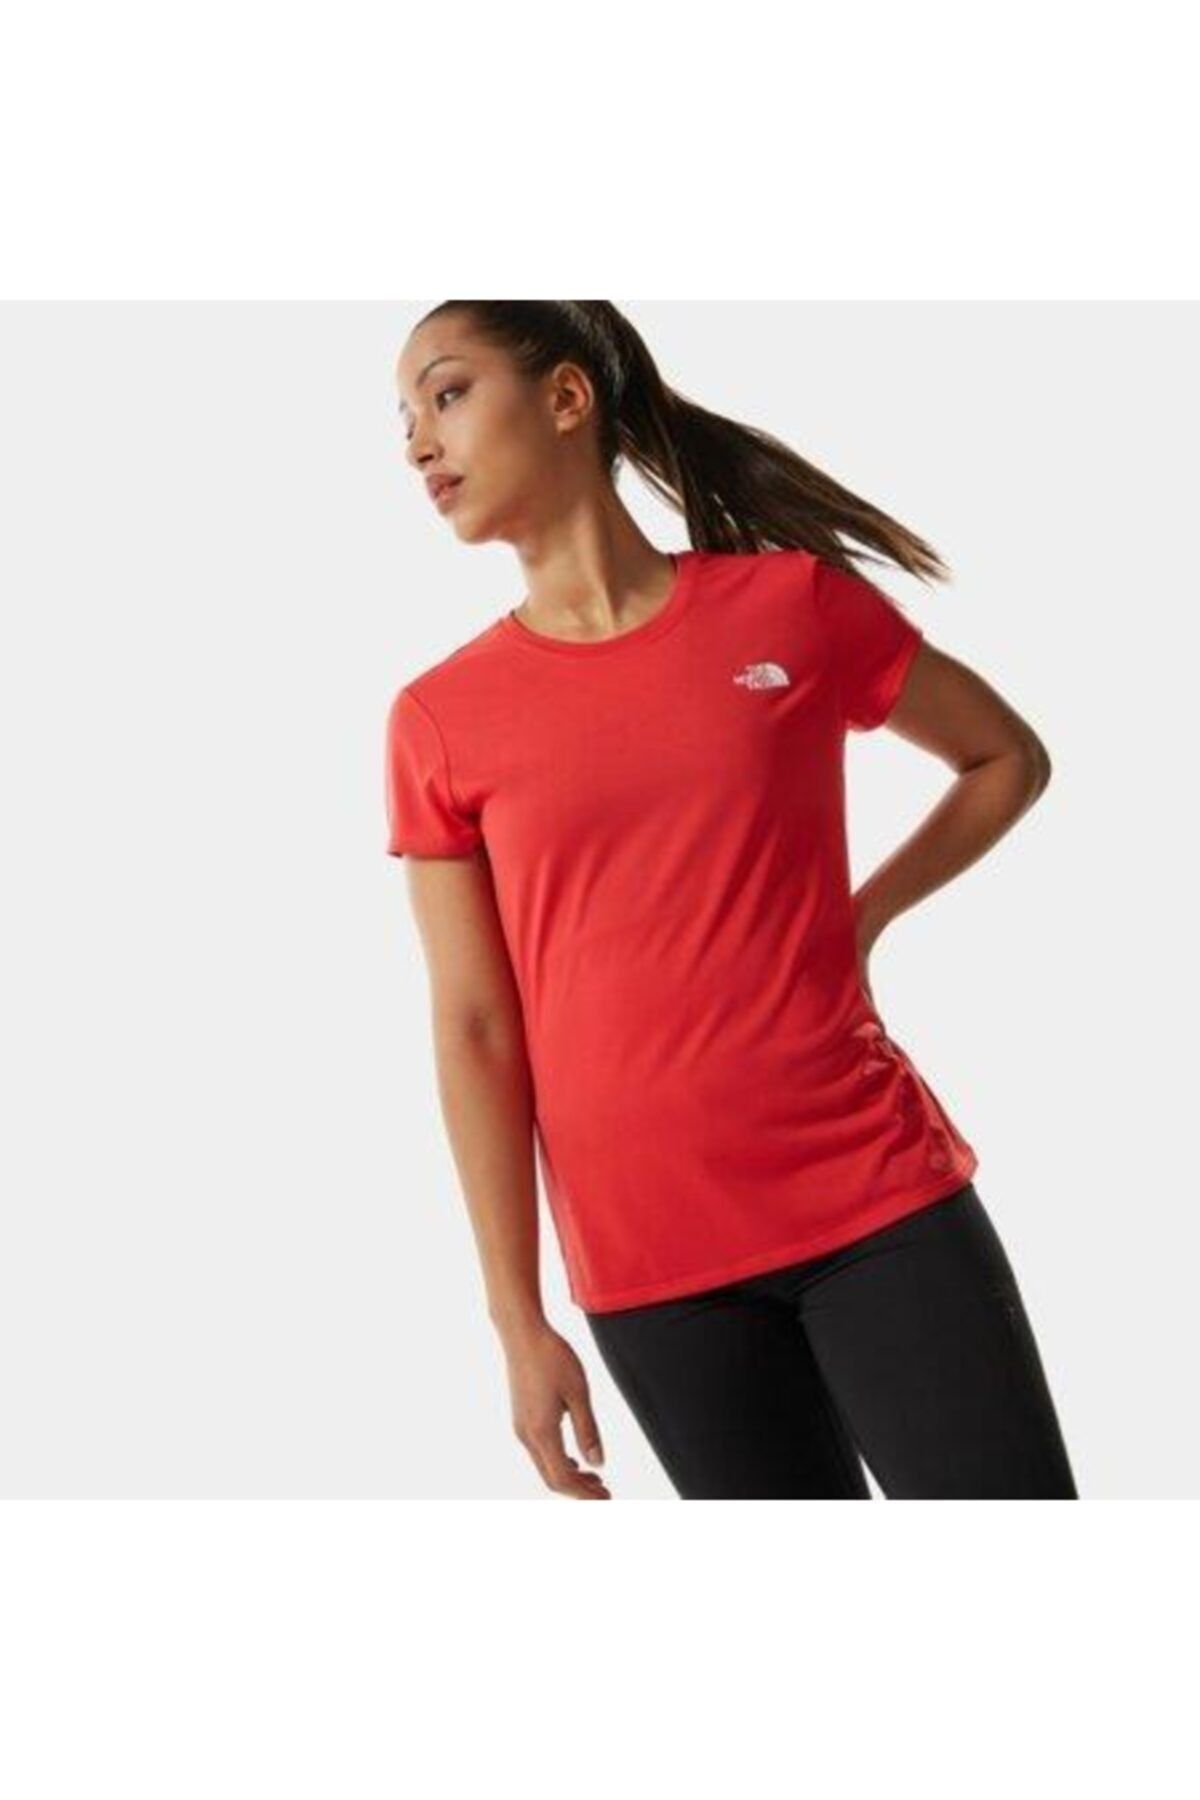 The North Face Kadın Kırmızı T-Shirt